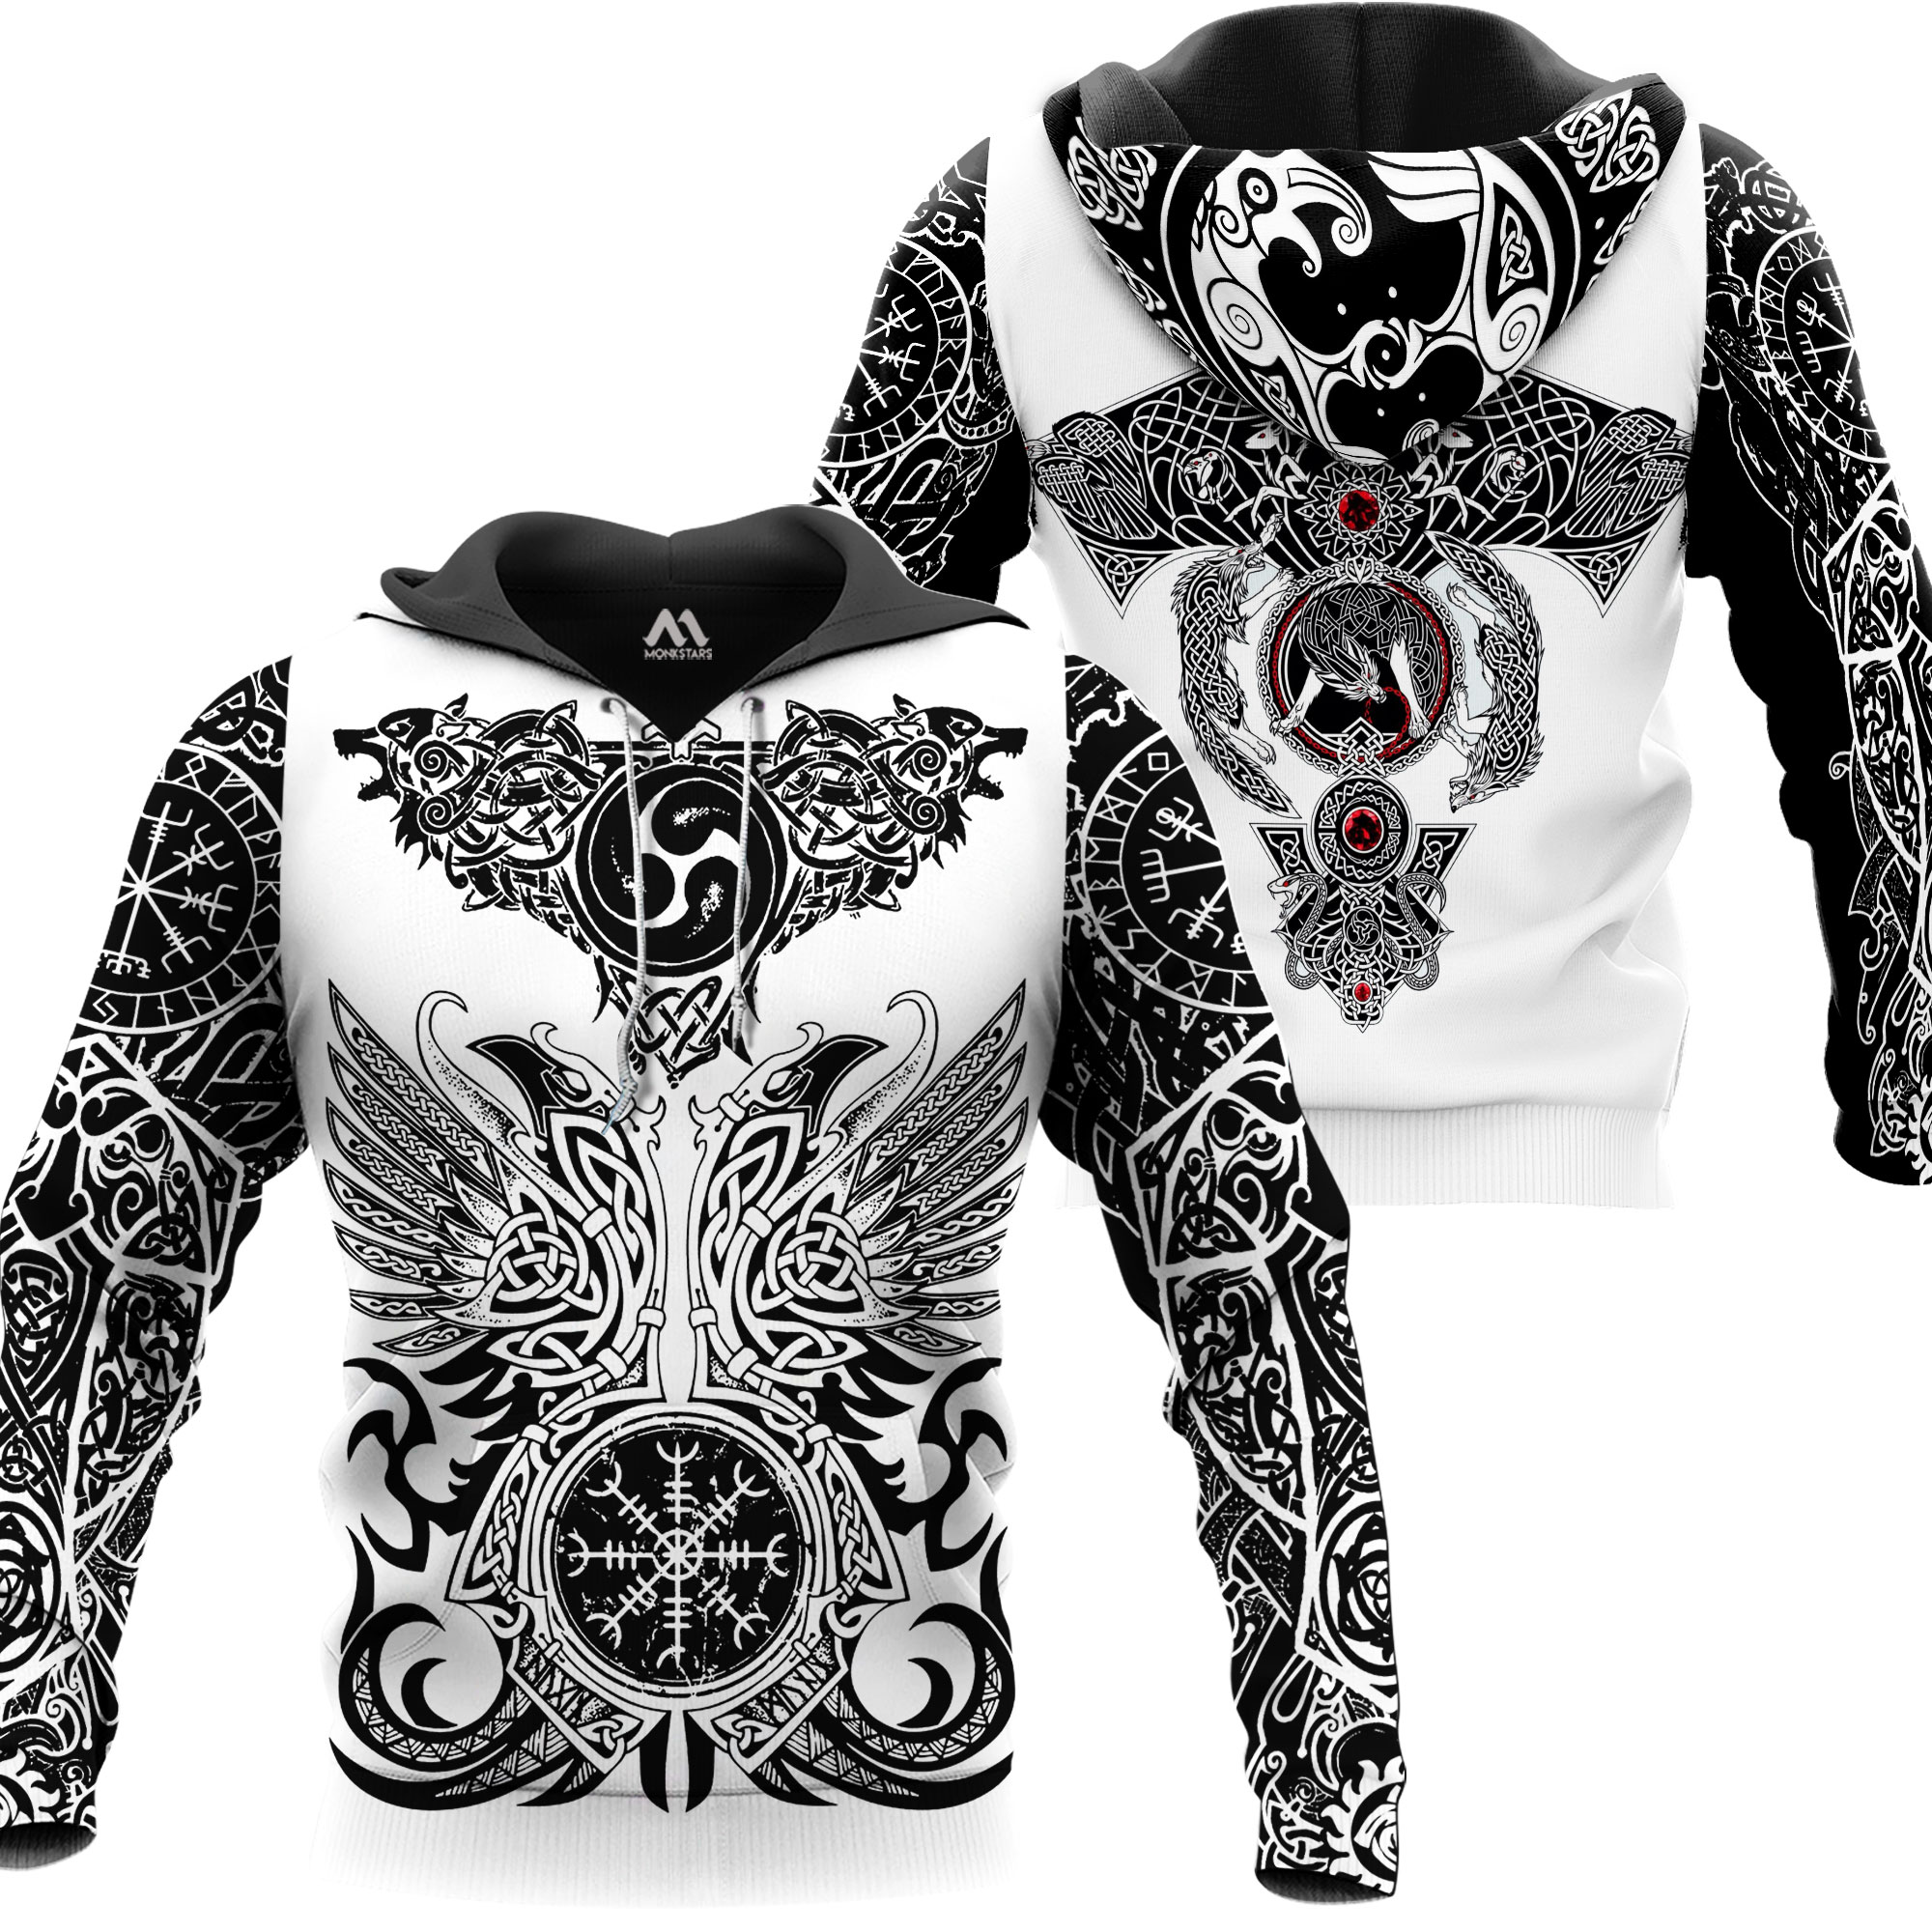 The viking tattoo art 3d full printing hoodie